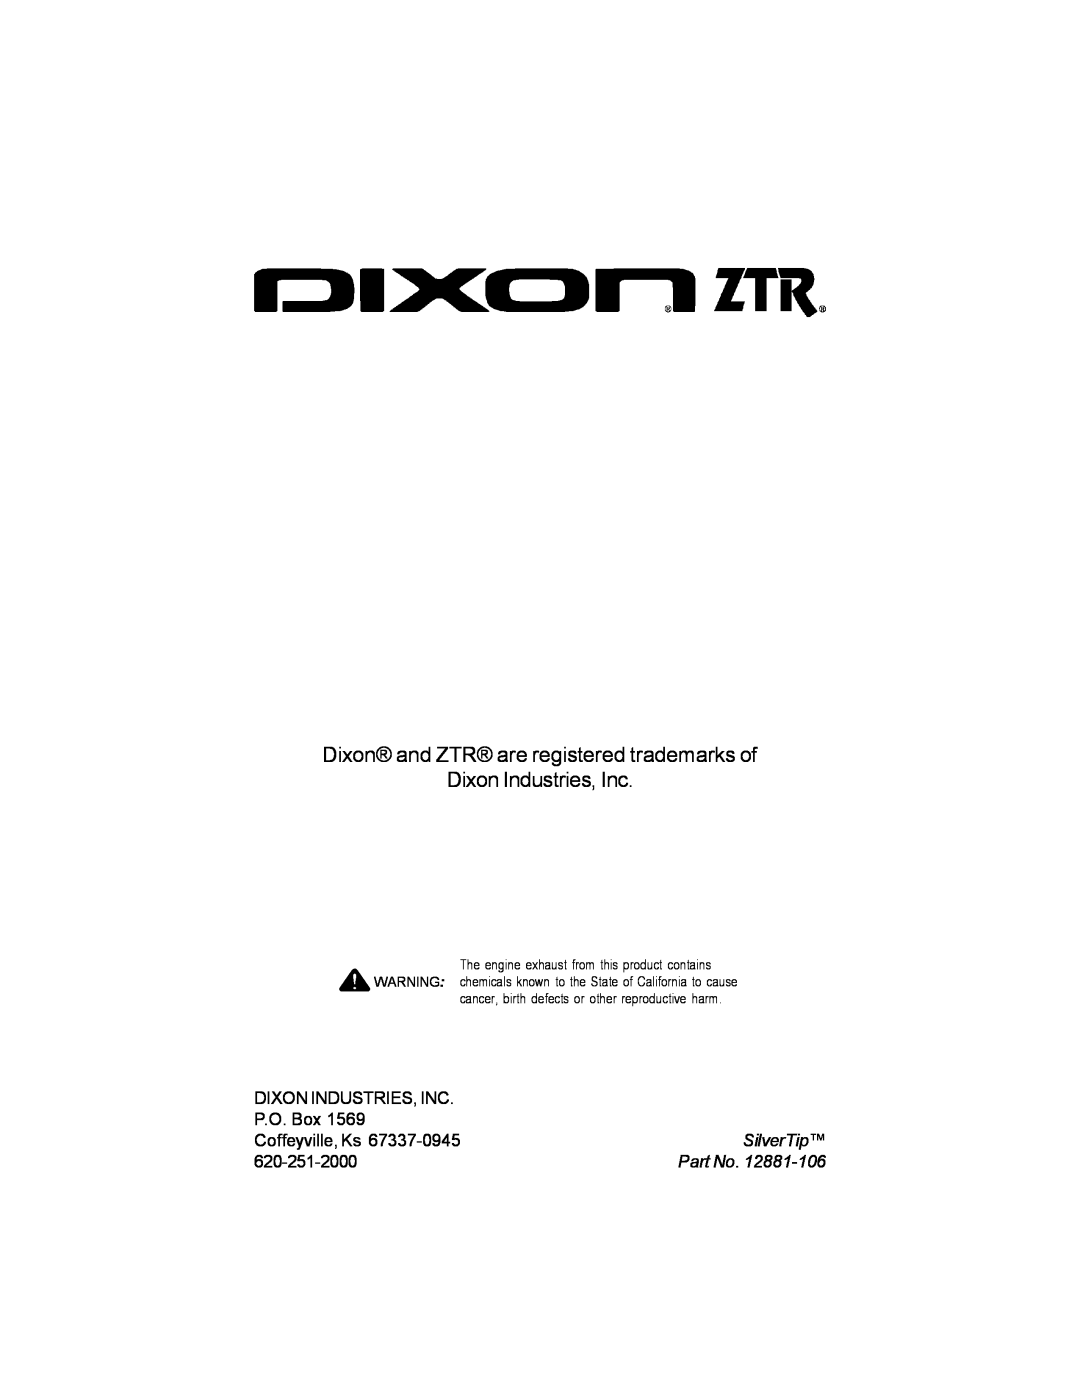 Dixon 12881-106 Dixon and ZTR are registered trademarks of Dixon Industries, Inc, P.O. Box, Coffeyville, Ks, SilverTip 